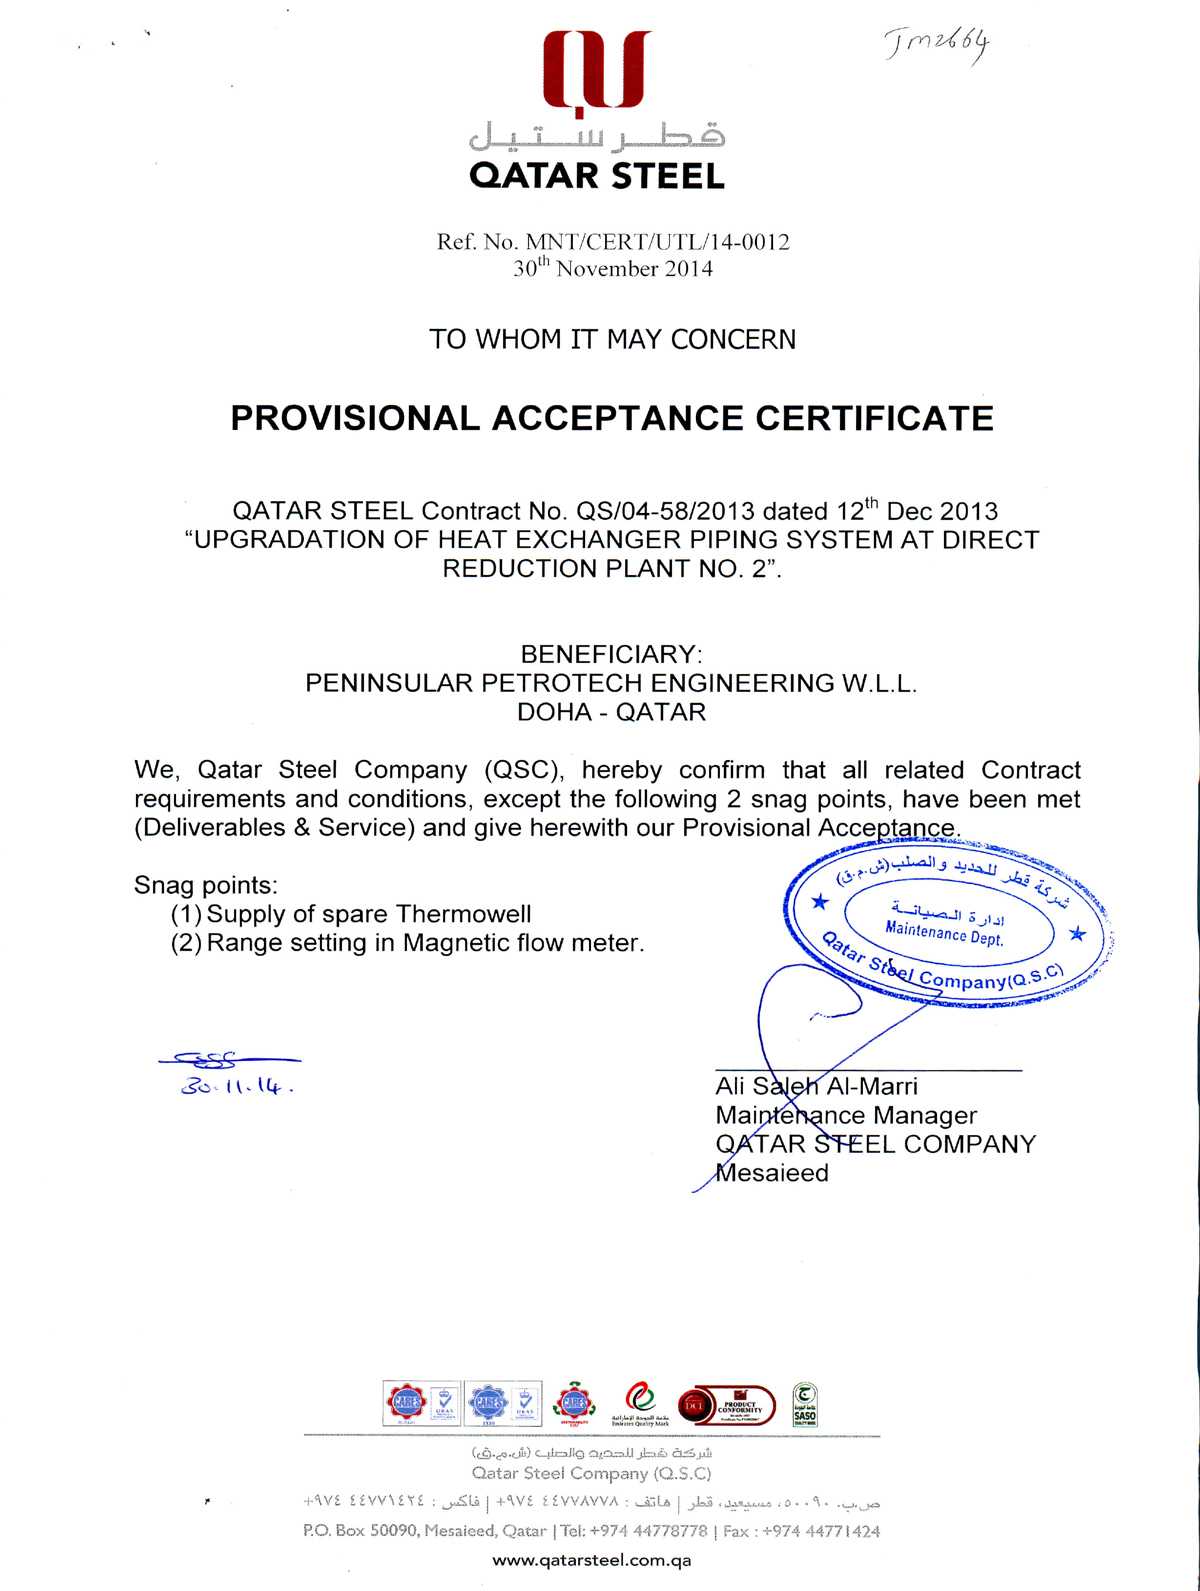 Acceptance Certificate Template ] - 10 Sample Printable Inside Certificate Of Acceptance Template